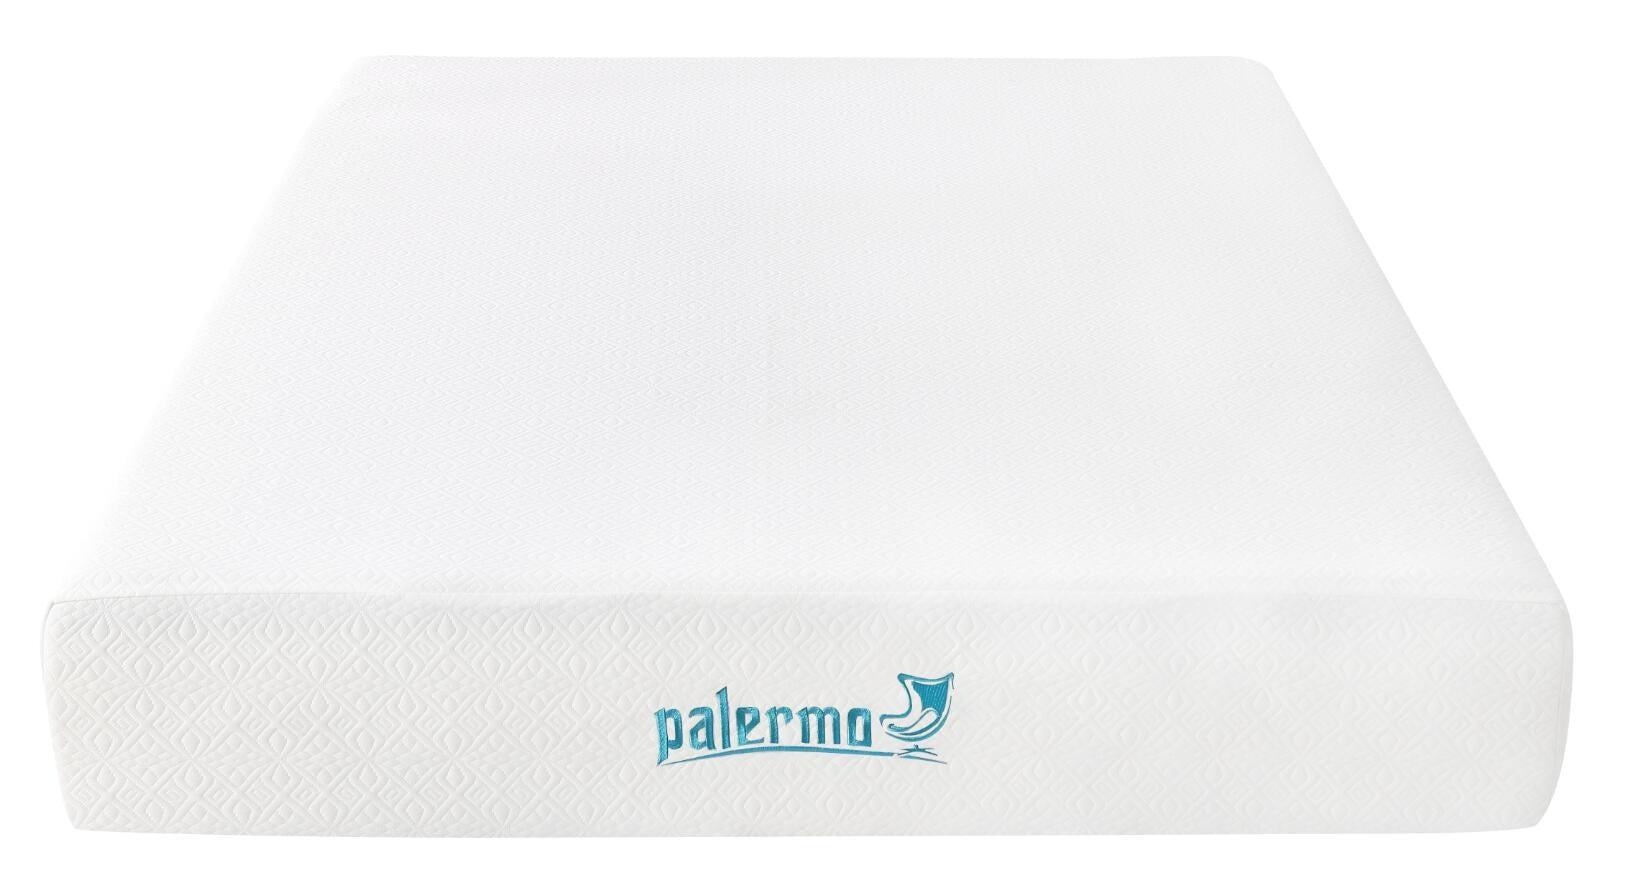 Palermo Double 25cm Gel Memory Foam Mattress - Dual-Layered - CertiPUR-US Certified Deals499